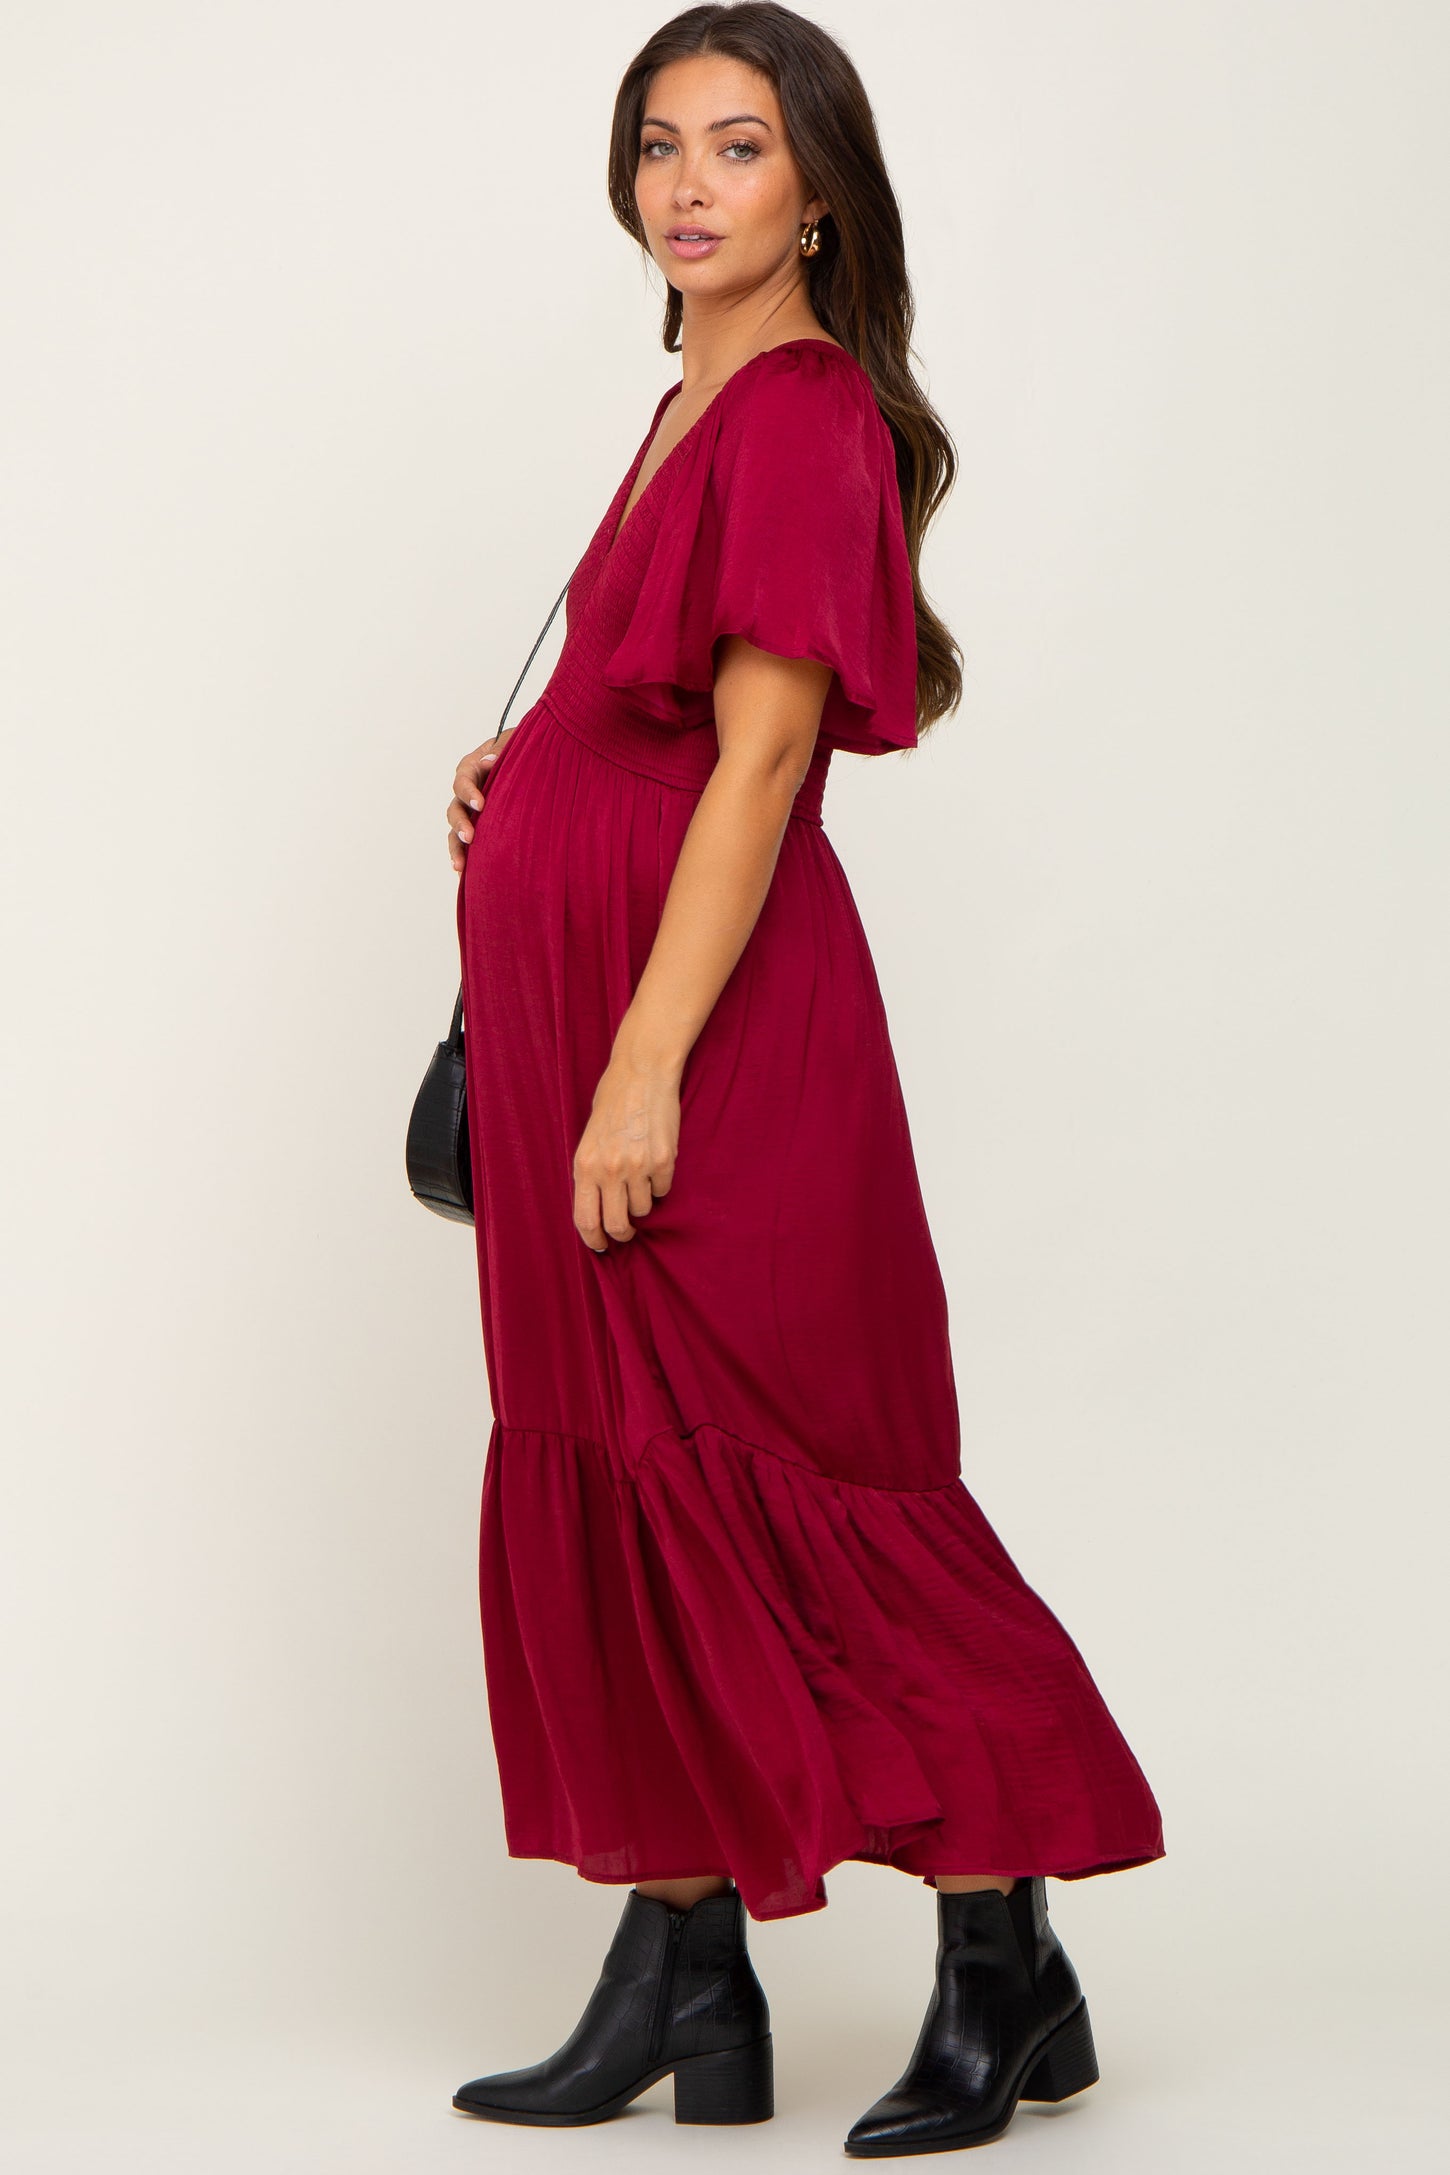 Burgundy Satin Smocked Maternity Midi Dress